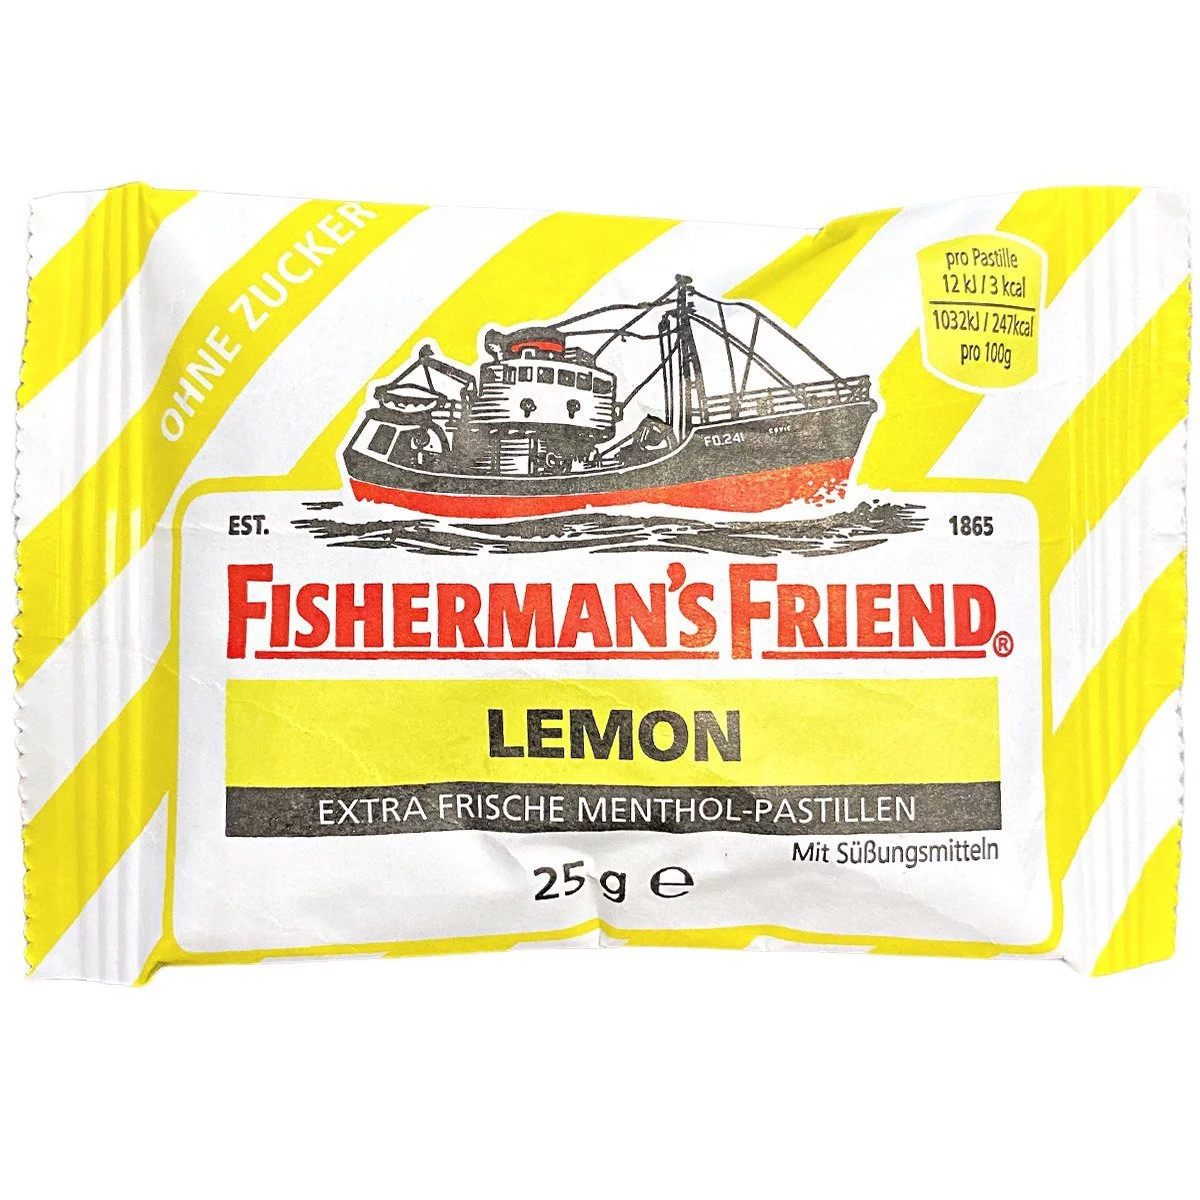 Fisherman's Friend Lemon ohne Zucker (25g) 1